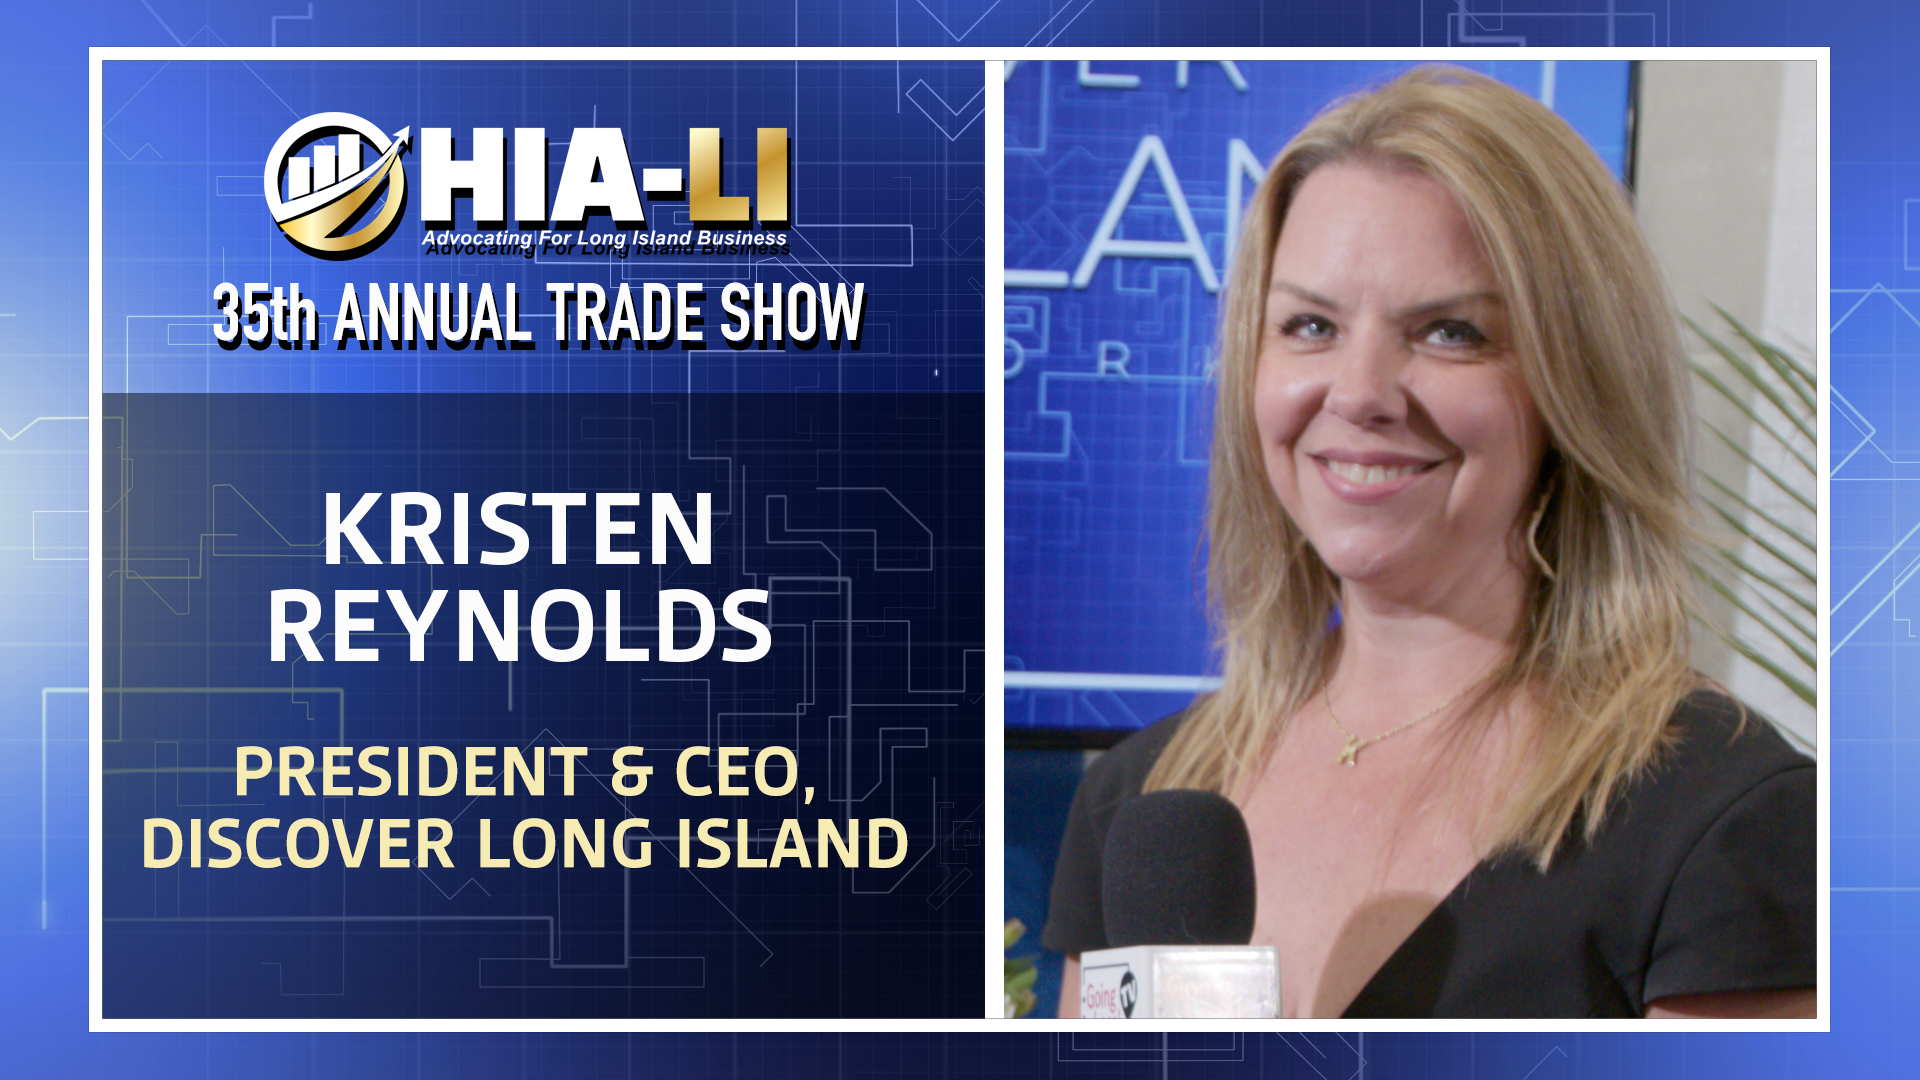 Kristen Reynolds, Discover Long Island - HIA-LI 35th Annual Trade Show